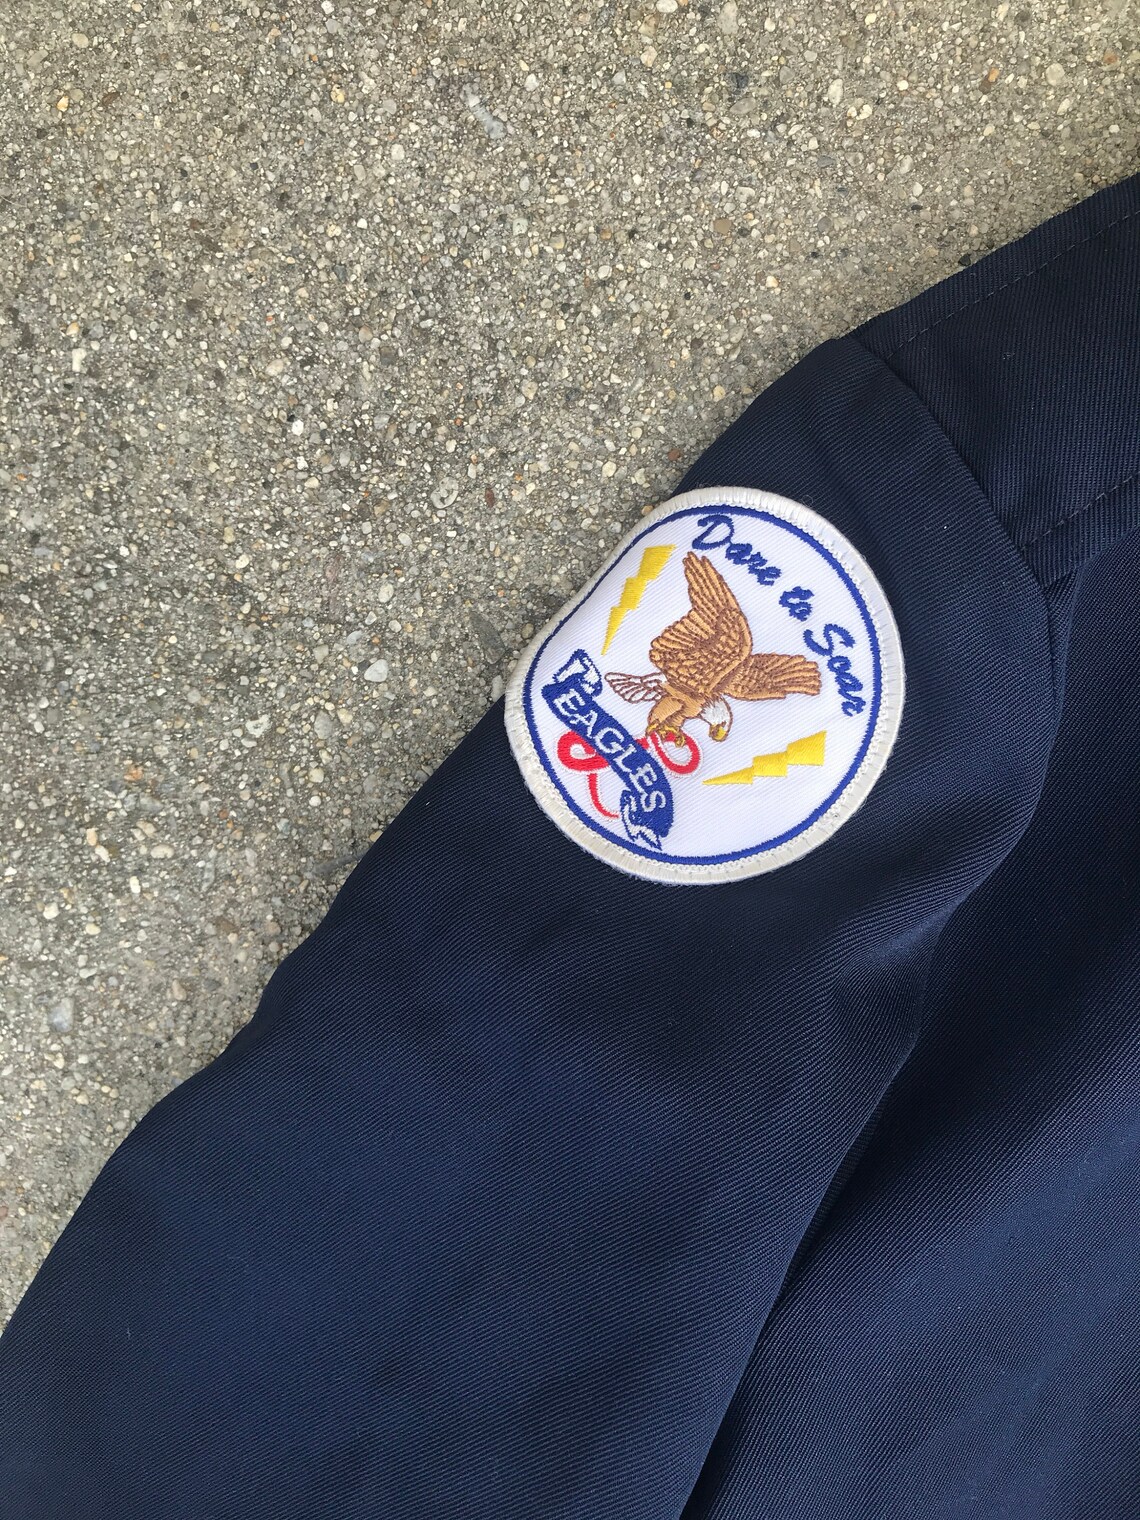 ROTC Dare to Soar Vintage Lightweight Navy Blue Jacket - Etsy